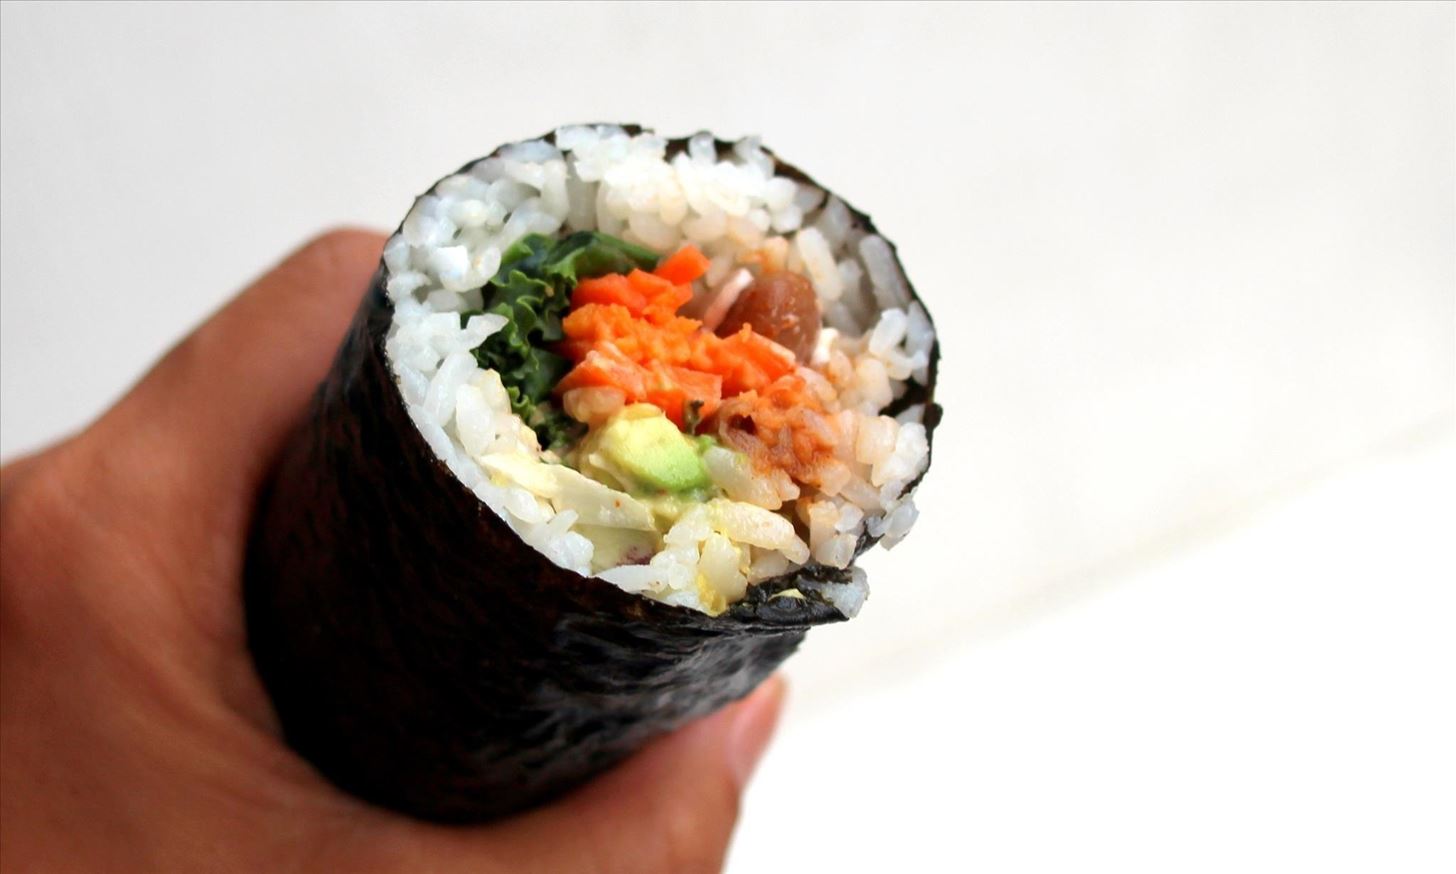 Sushi + Burrito = The Ultimate Handheld Meal